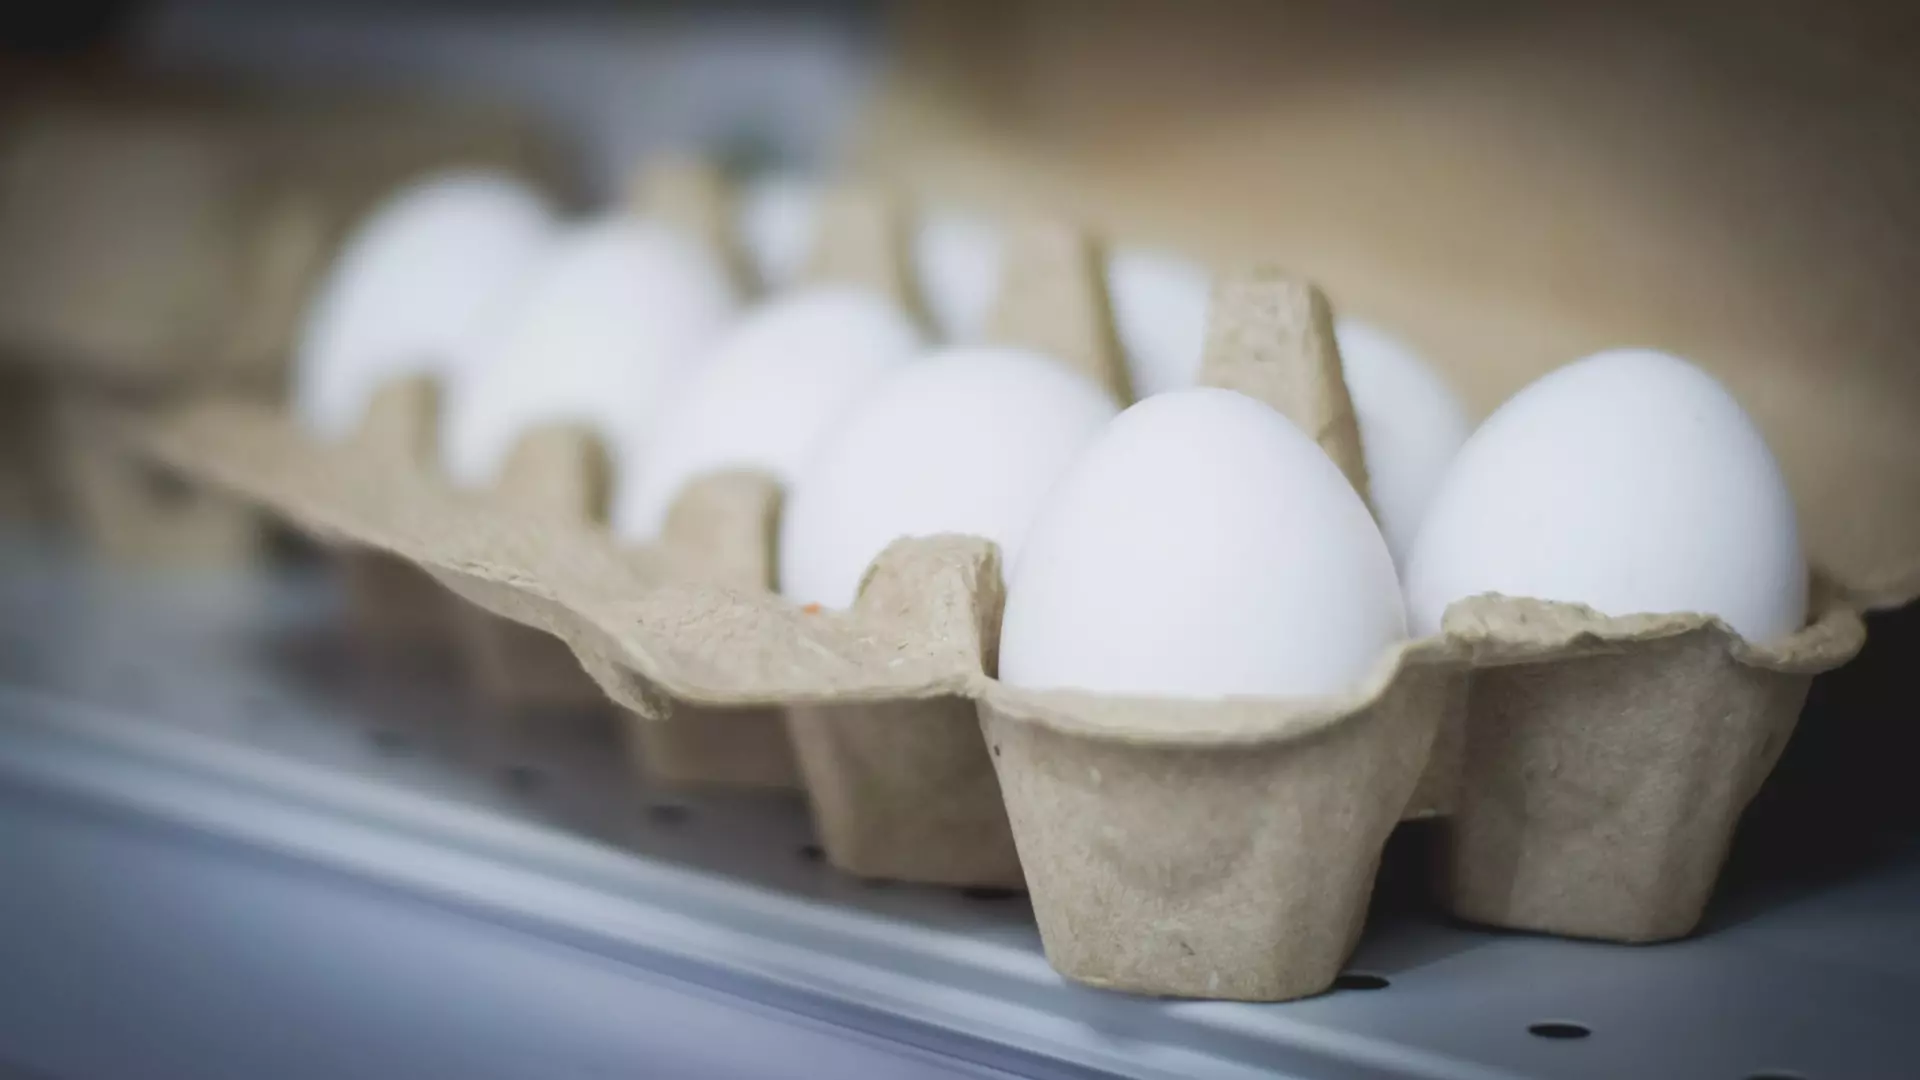 Оренбуржцы жалуются на скачок цен на куриные яйца